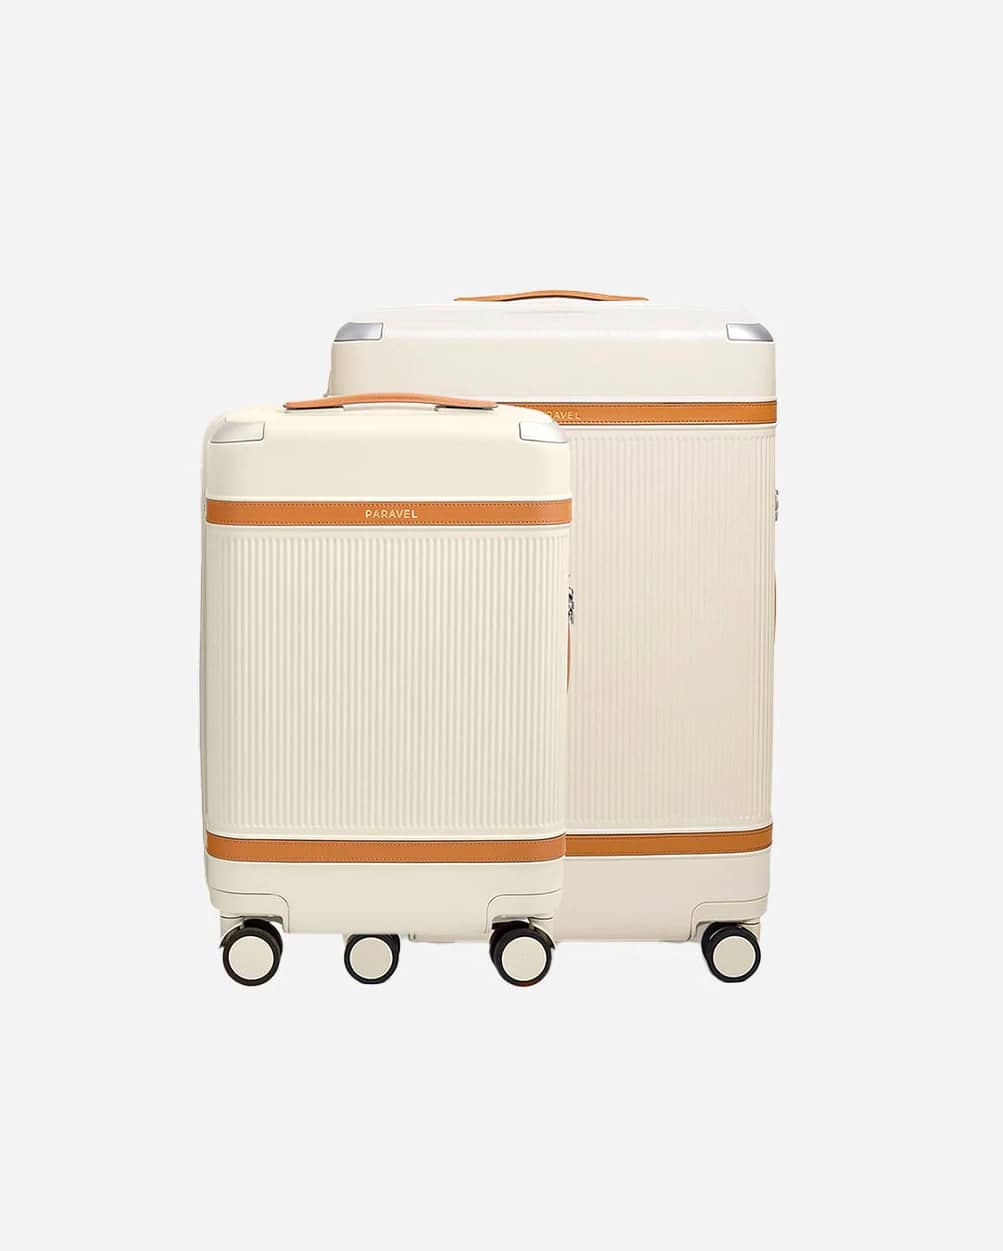 Retro-insipred luggage set